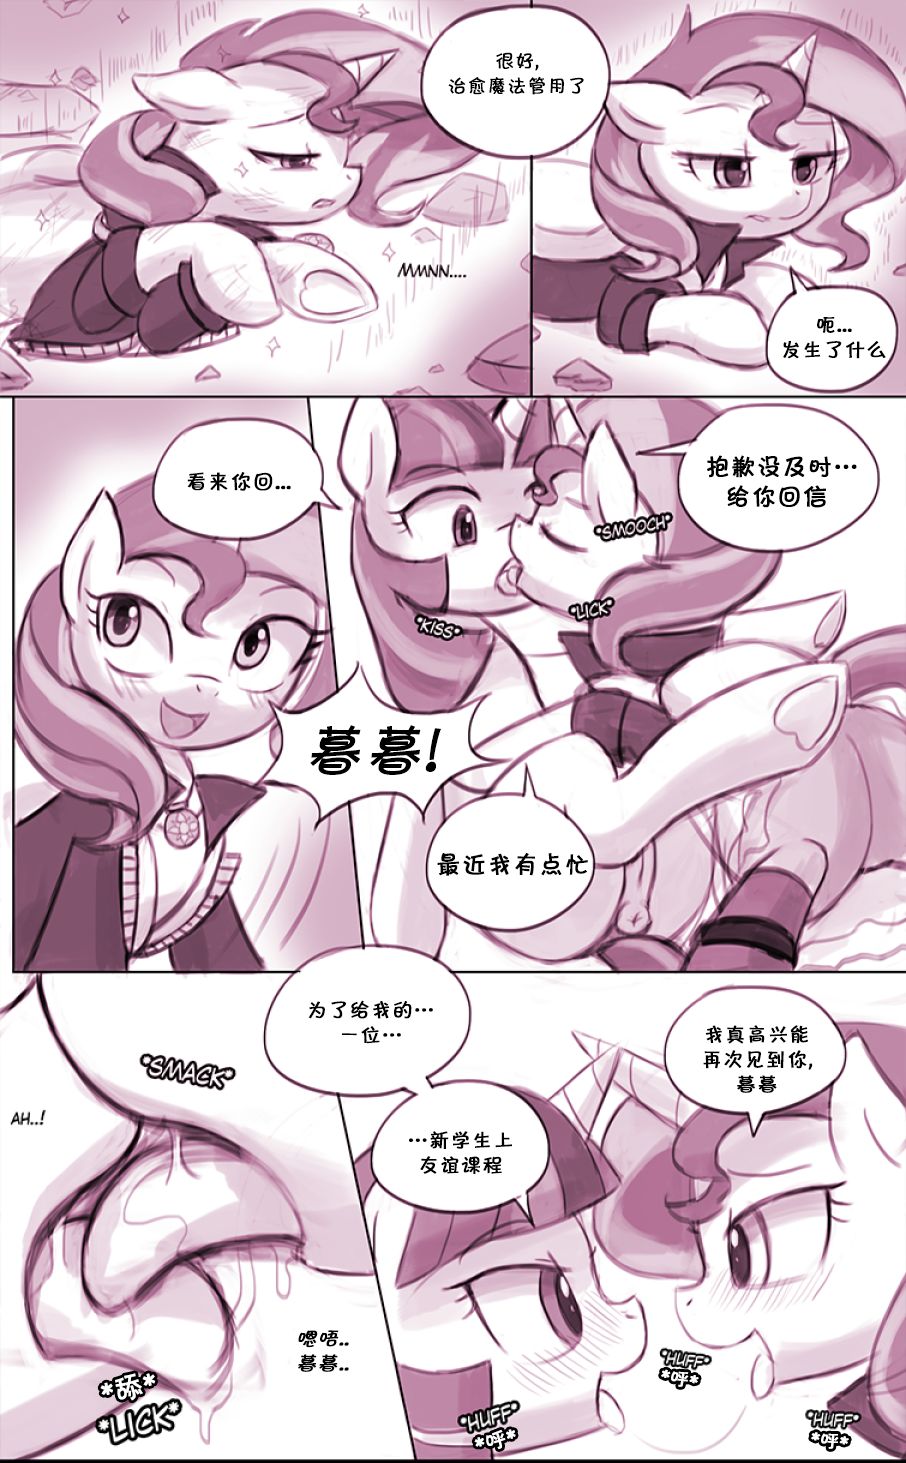 [Lumineko] Homesick | 吾心归处是吾乡 (My Little Pony: Friendship is Magic) [Chinese] [PhoenixTranslation] 【Lumineko】【PhoenixTranslation】Homesick